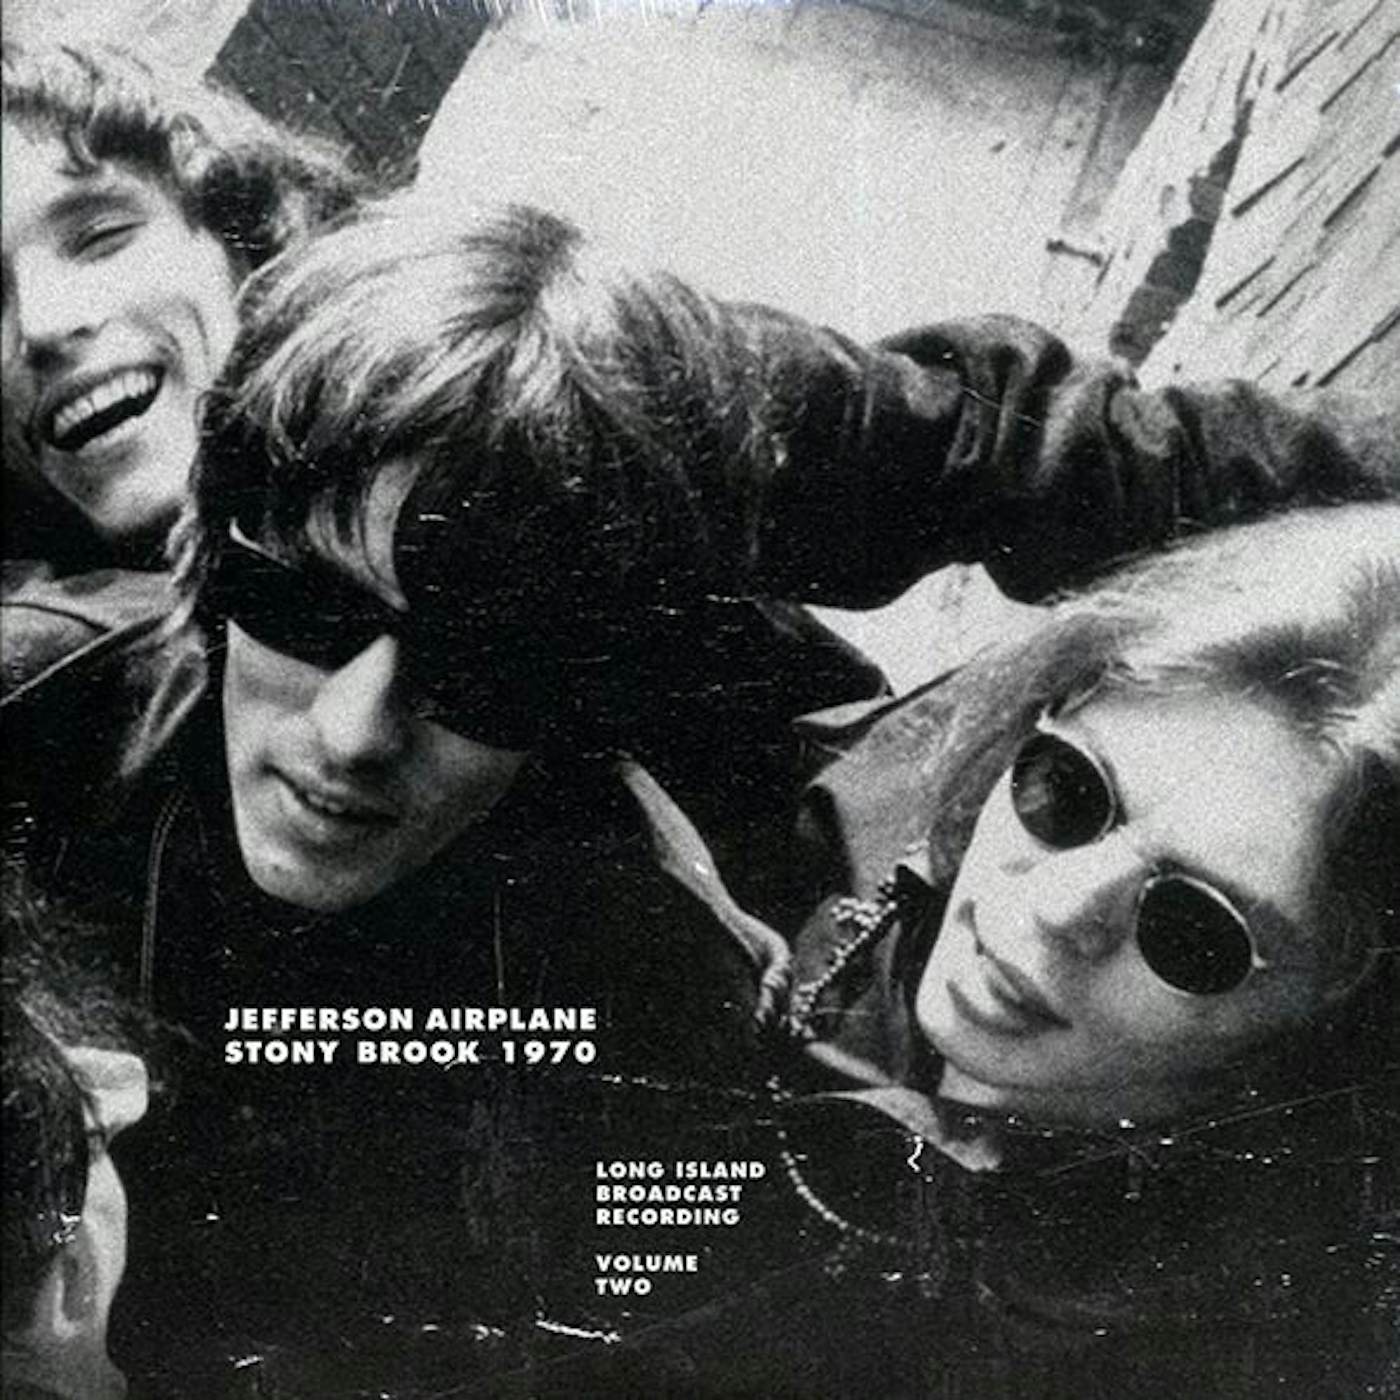 Jefferson Airplane  LP -  Stony Brook 1970 Volume 2: Long Island Broadcast Recording (2xLP) (Vinyl)